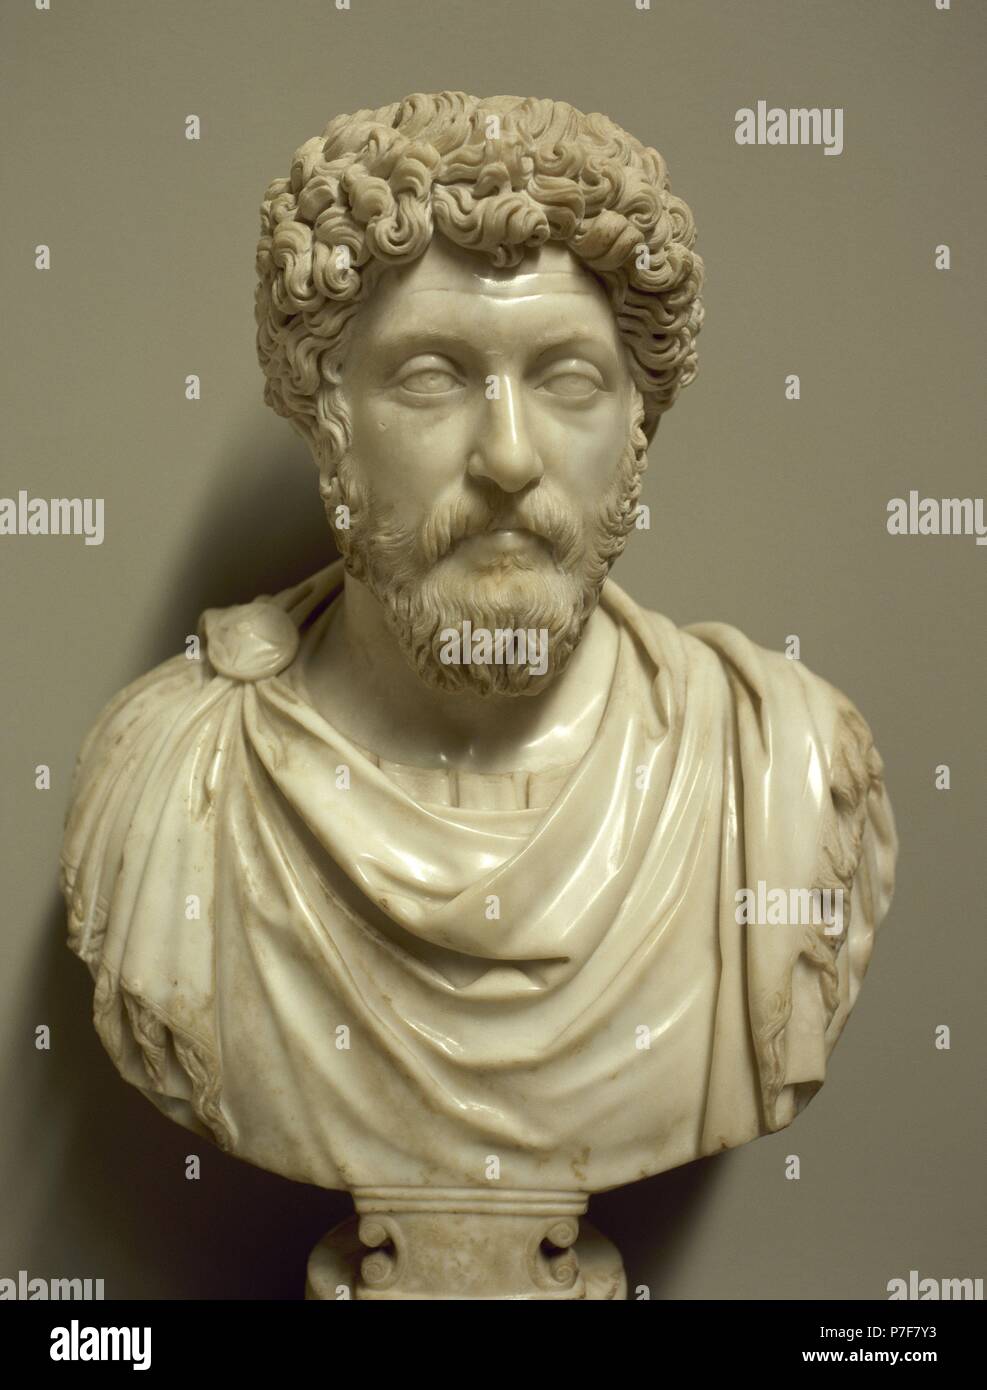 Marcus Aurelius. Roman emperor from 161-180. Antonine dynasty. Bust, 1st century AD. Ephesus Museum. Turkey. Stock Photo